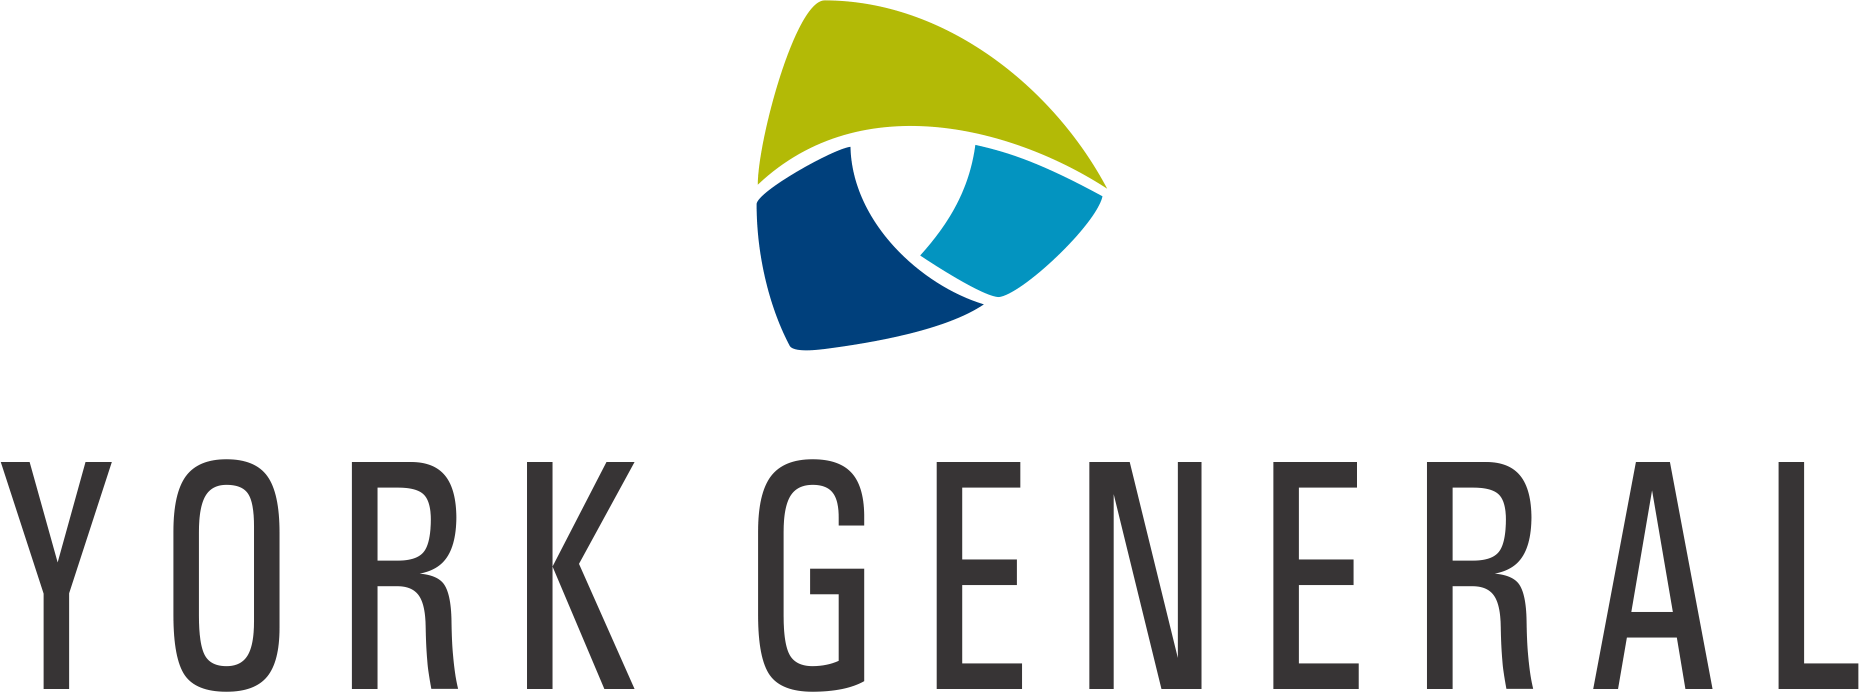 York General Health Care Services Logo